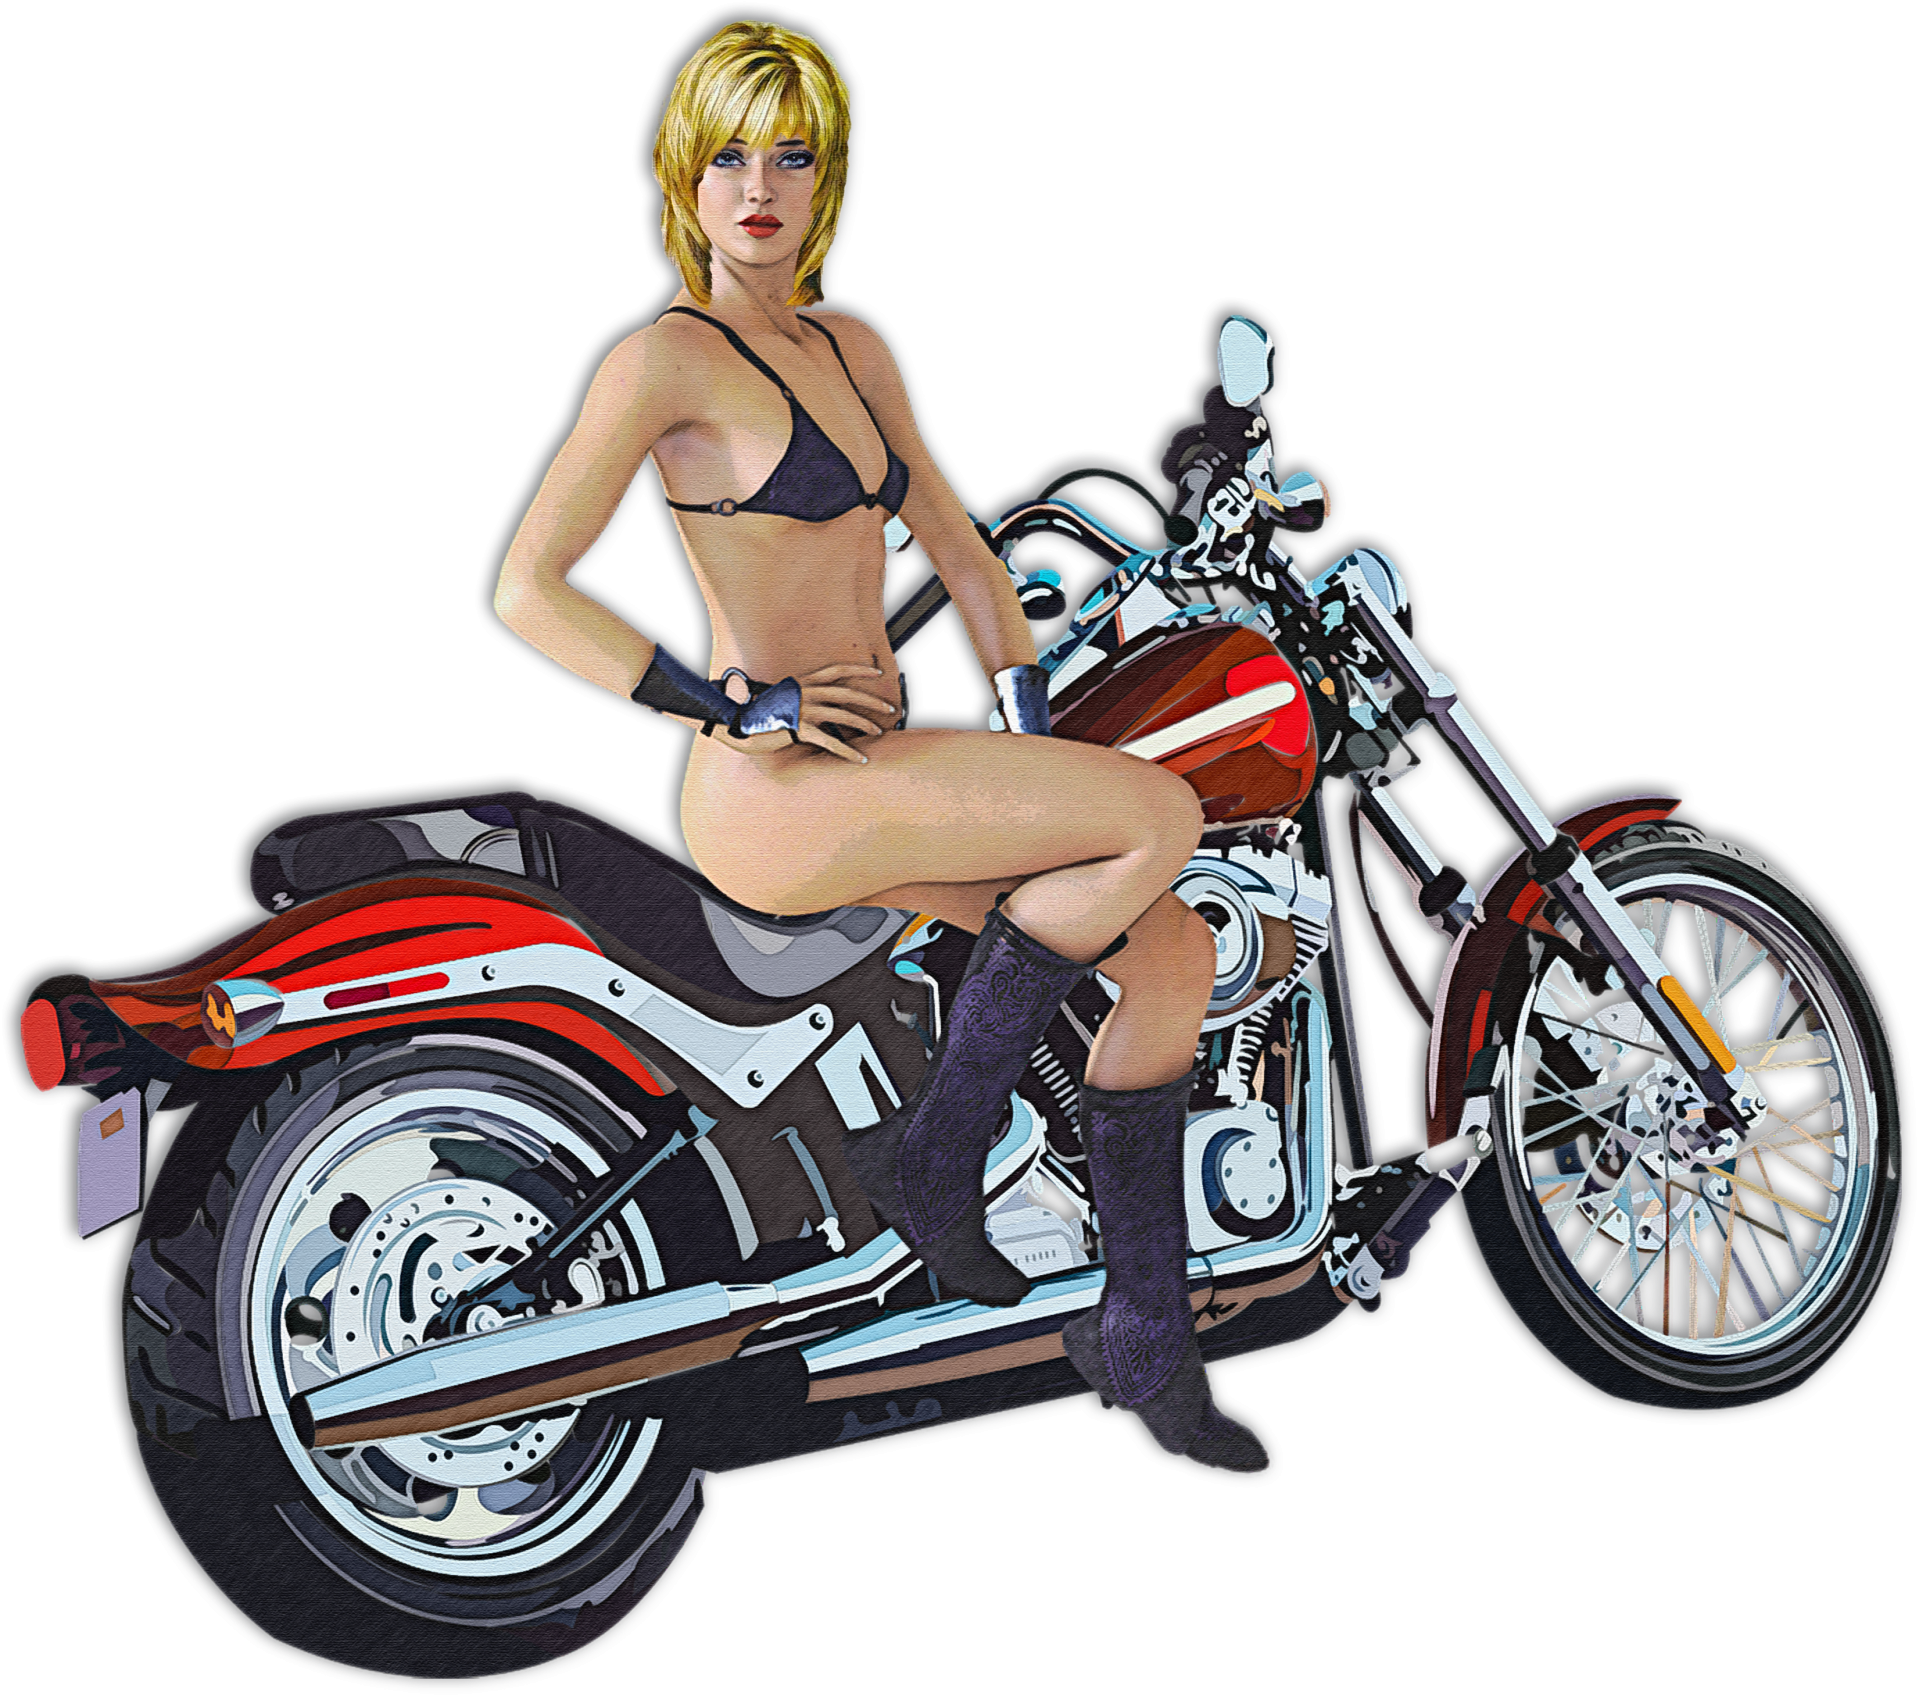 Lady On A Motor Bike